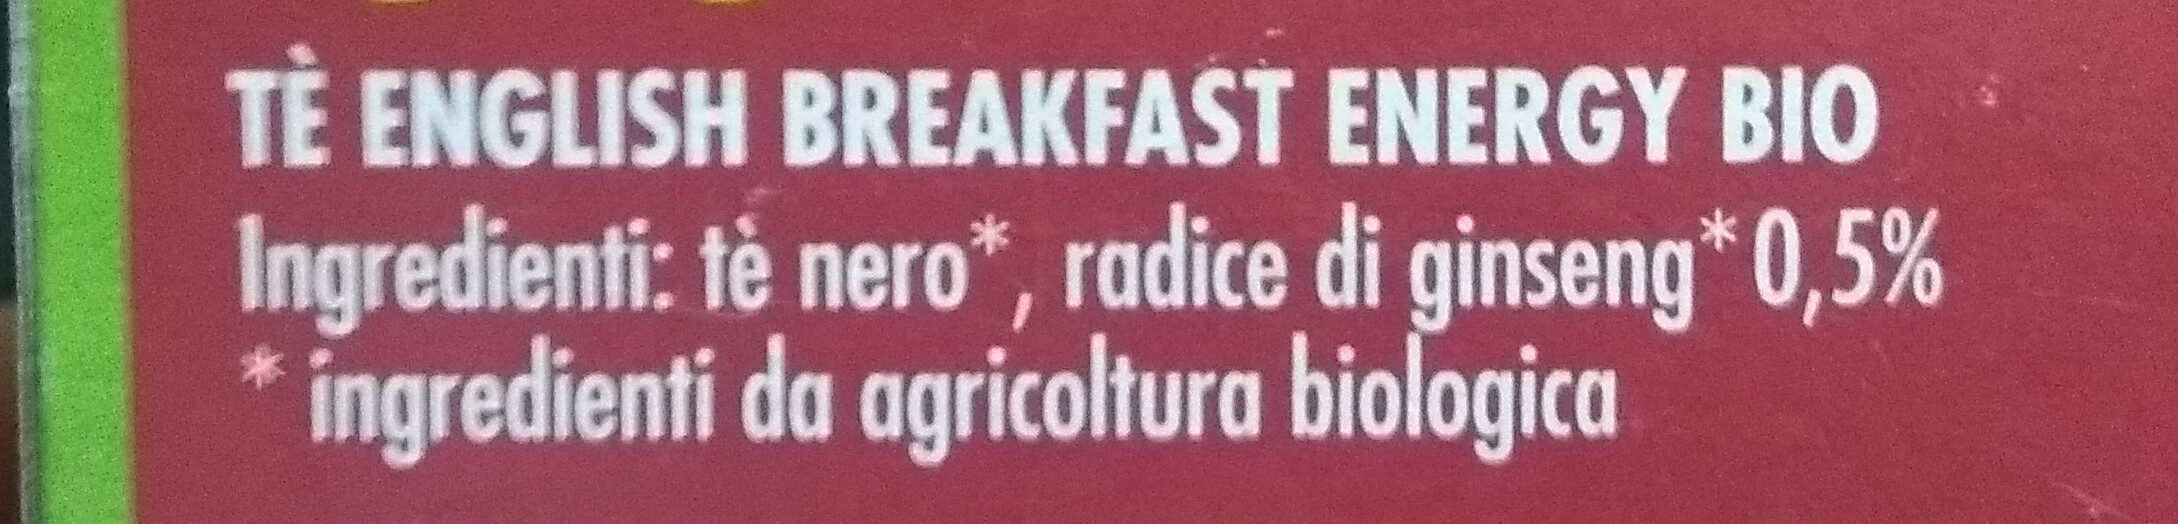 English Breakfast Energy - Ingredienti